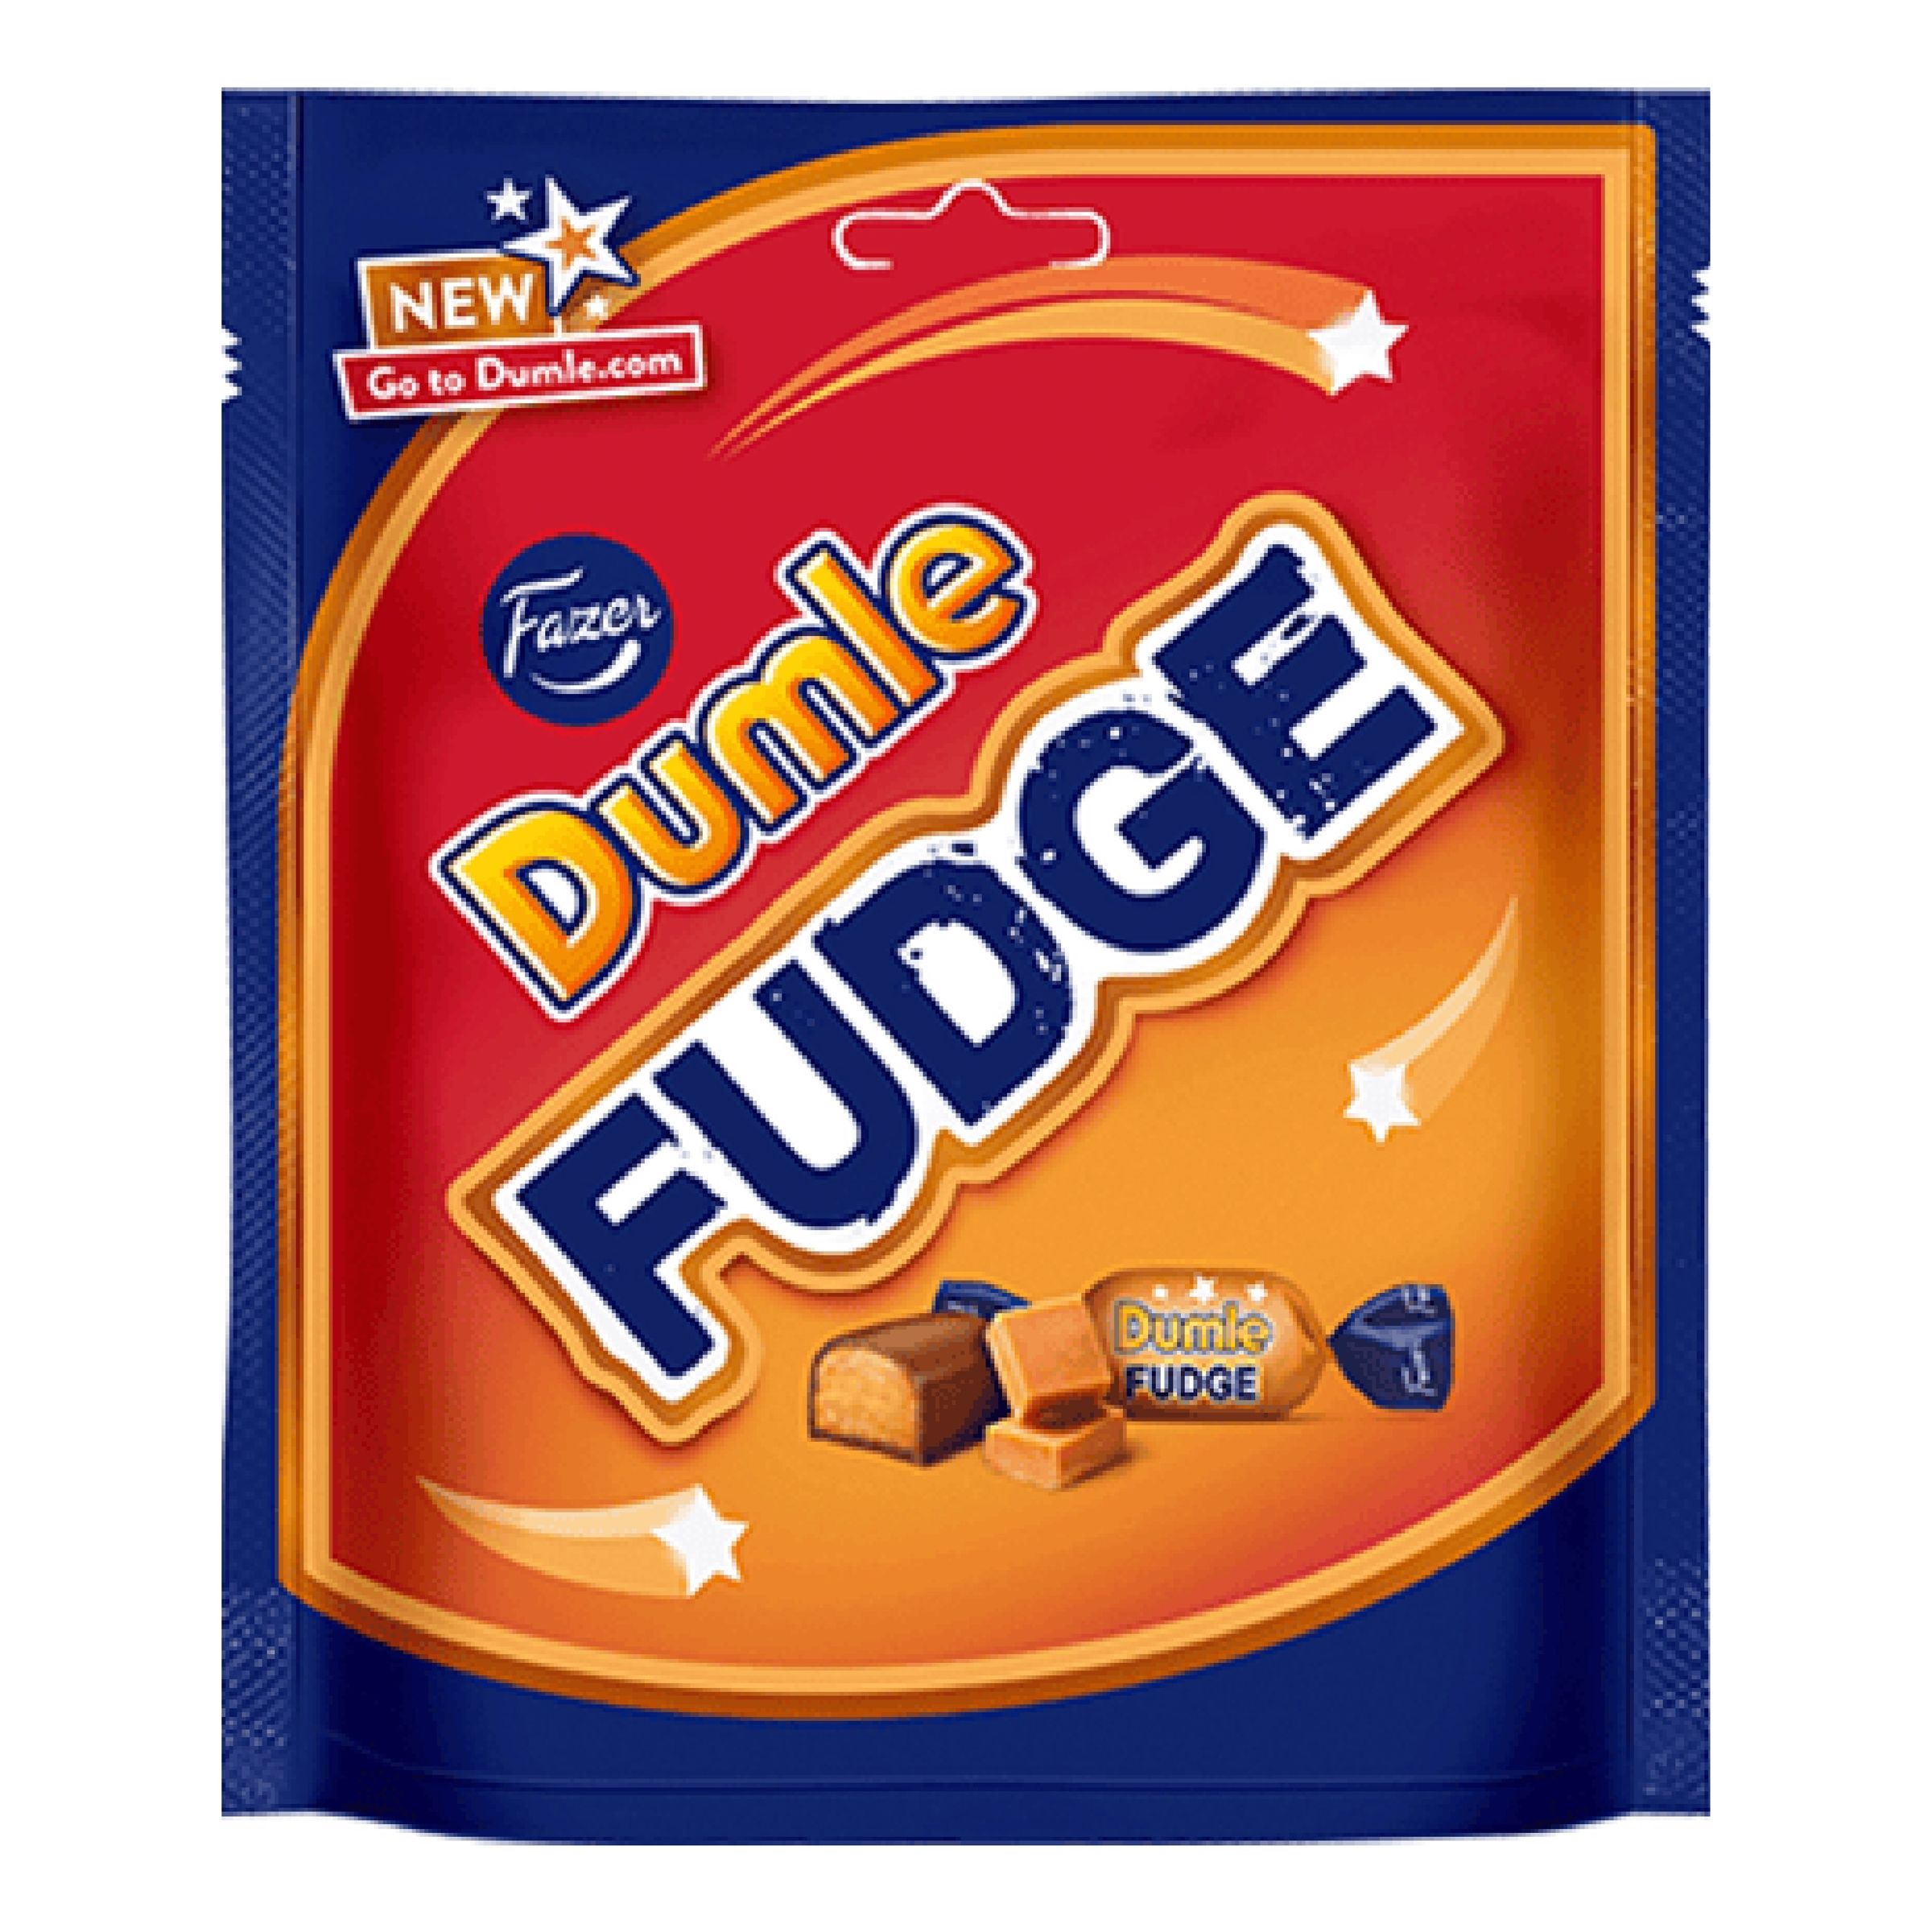 Dumle Fudge Godispåse - 160 gram